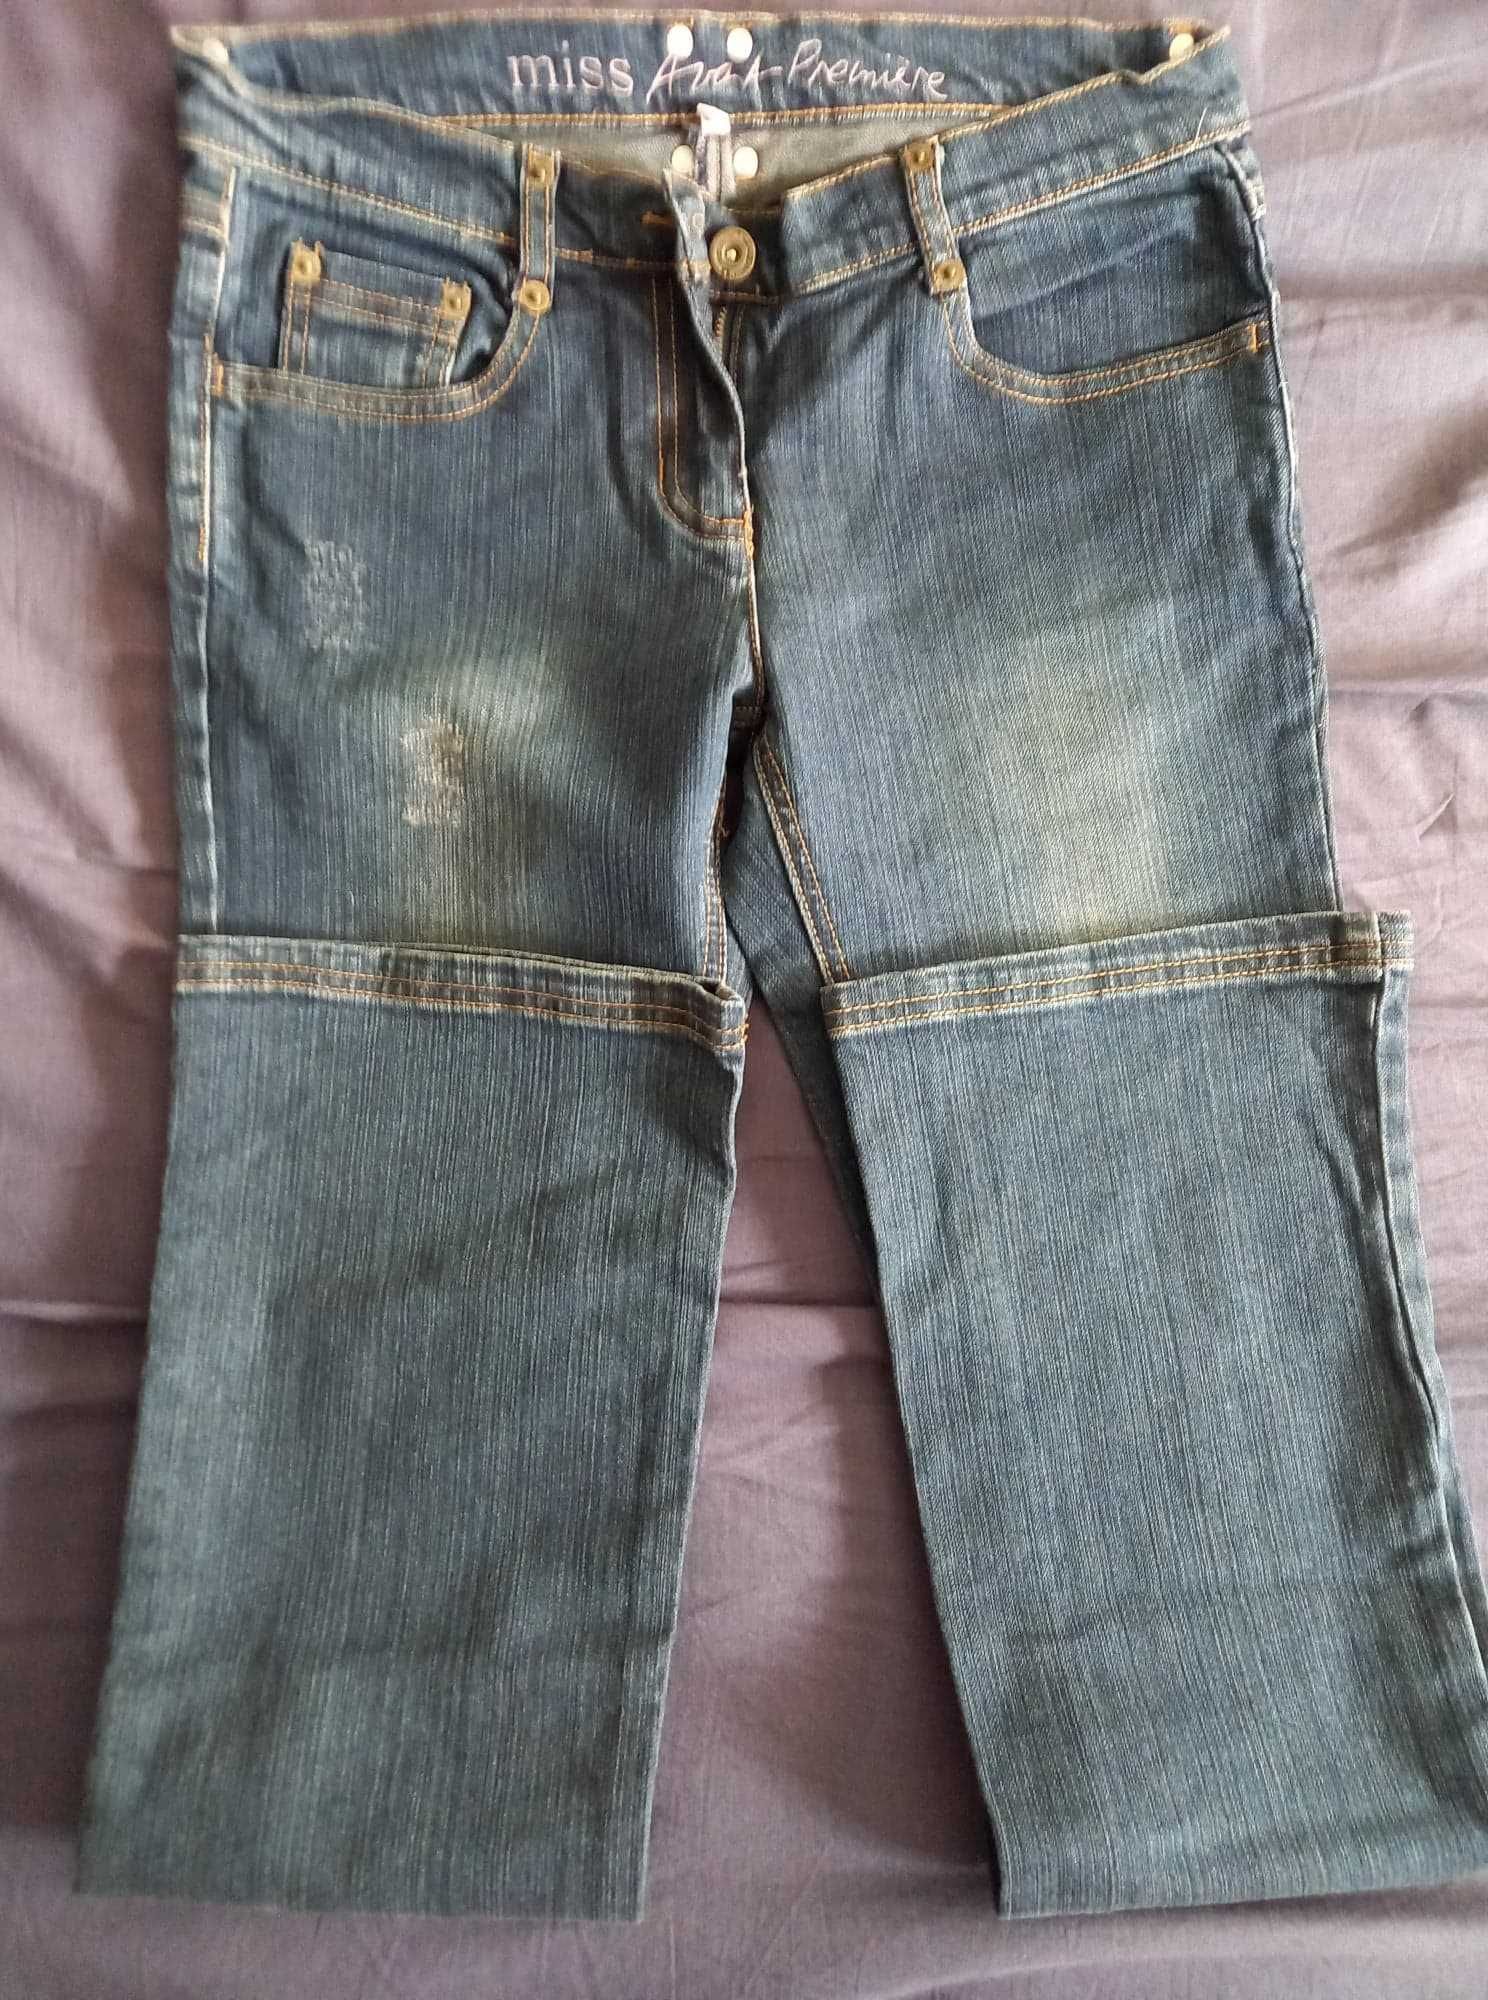 Blugi jeans dama denim Miss Ava A Premiere usor evazati talie 38cm